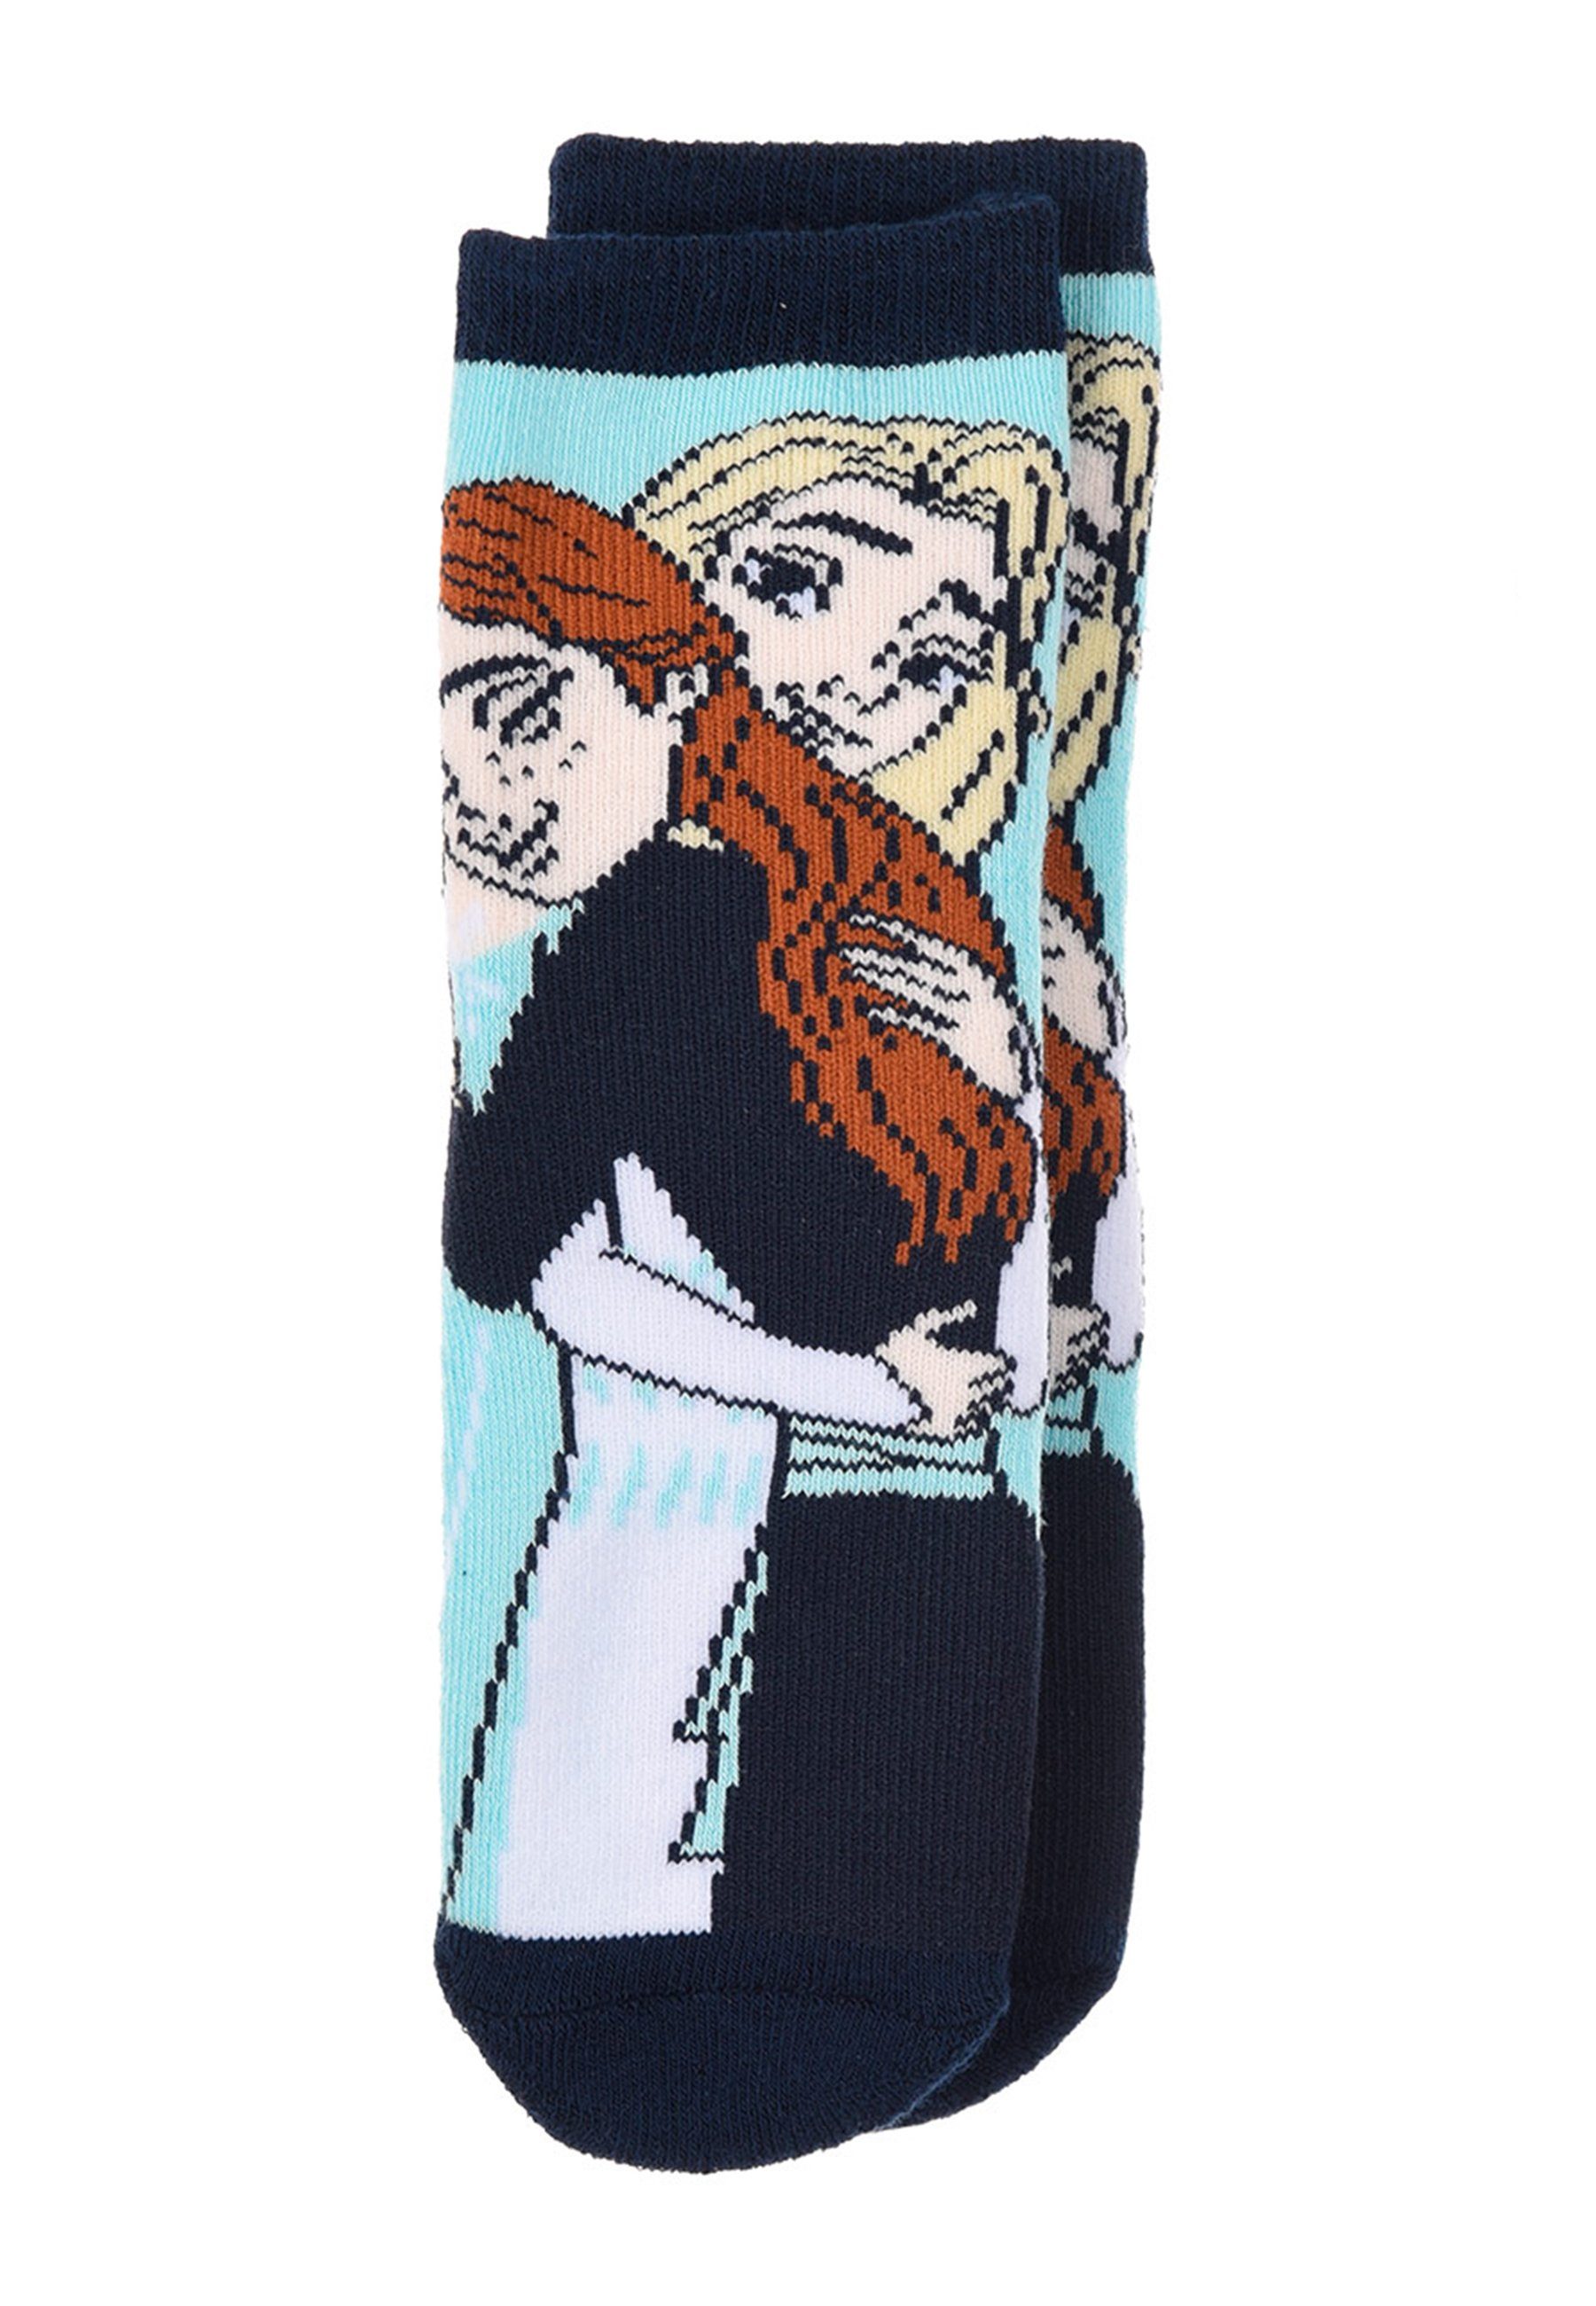 maximaler Diskontsatz Disney Frozen Socken Mädchen Stopper-Socken Socken Kinder Strümpfe Gumminoppen Eiskönigin